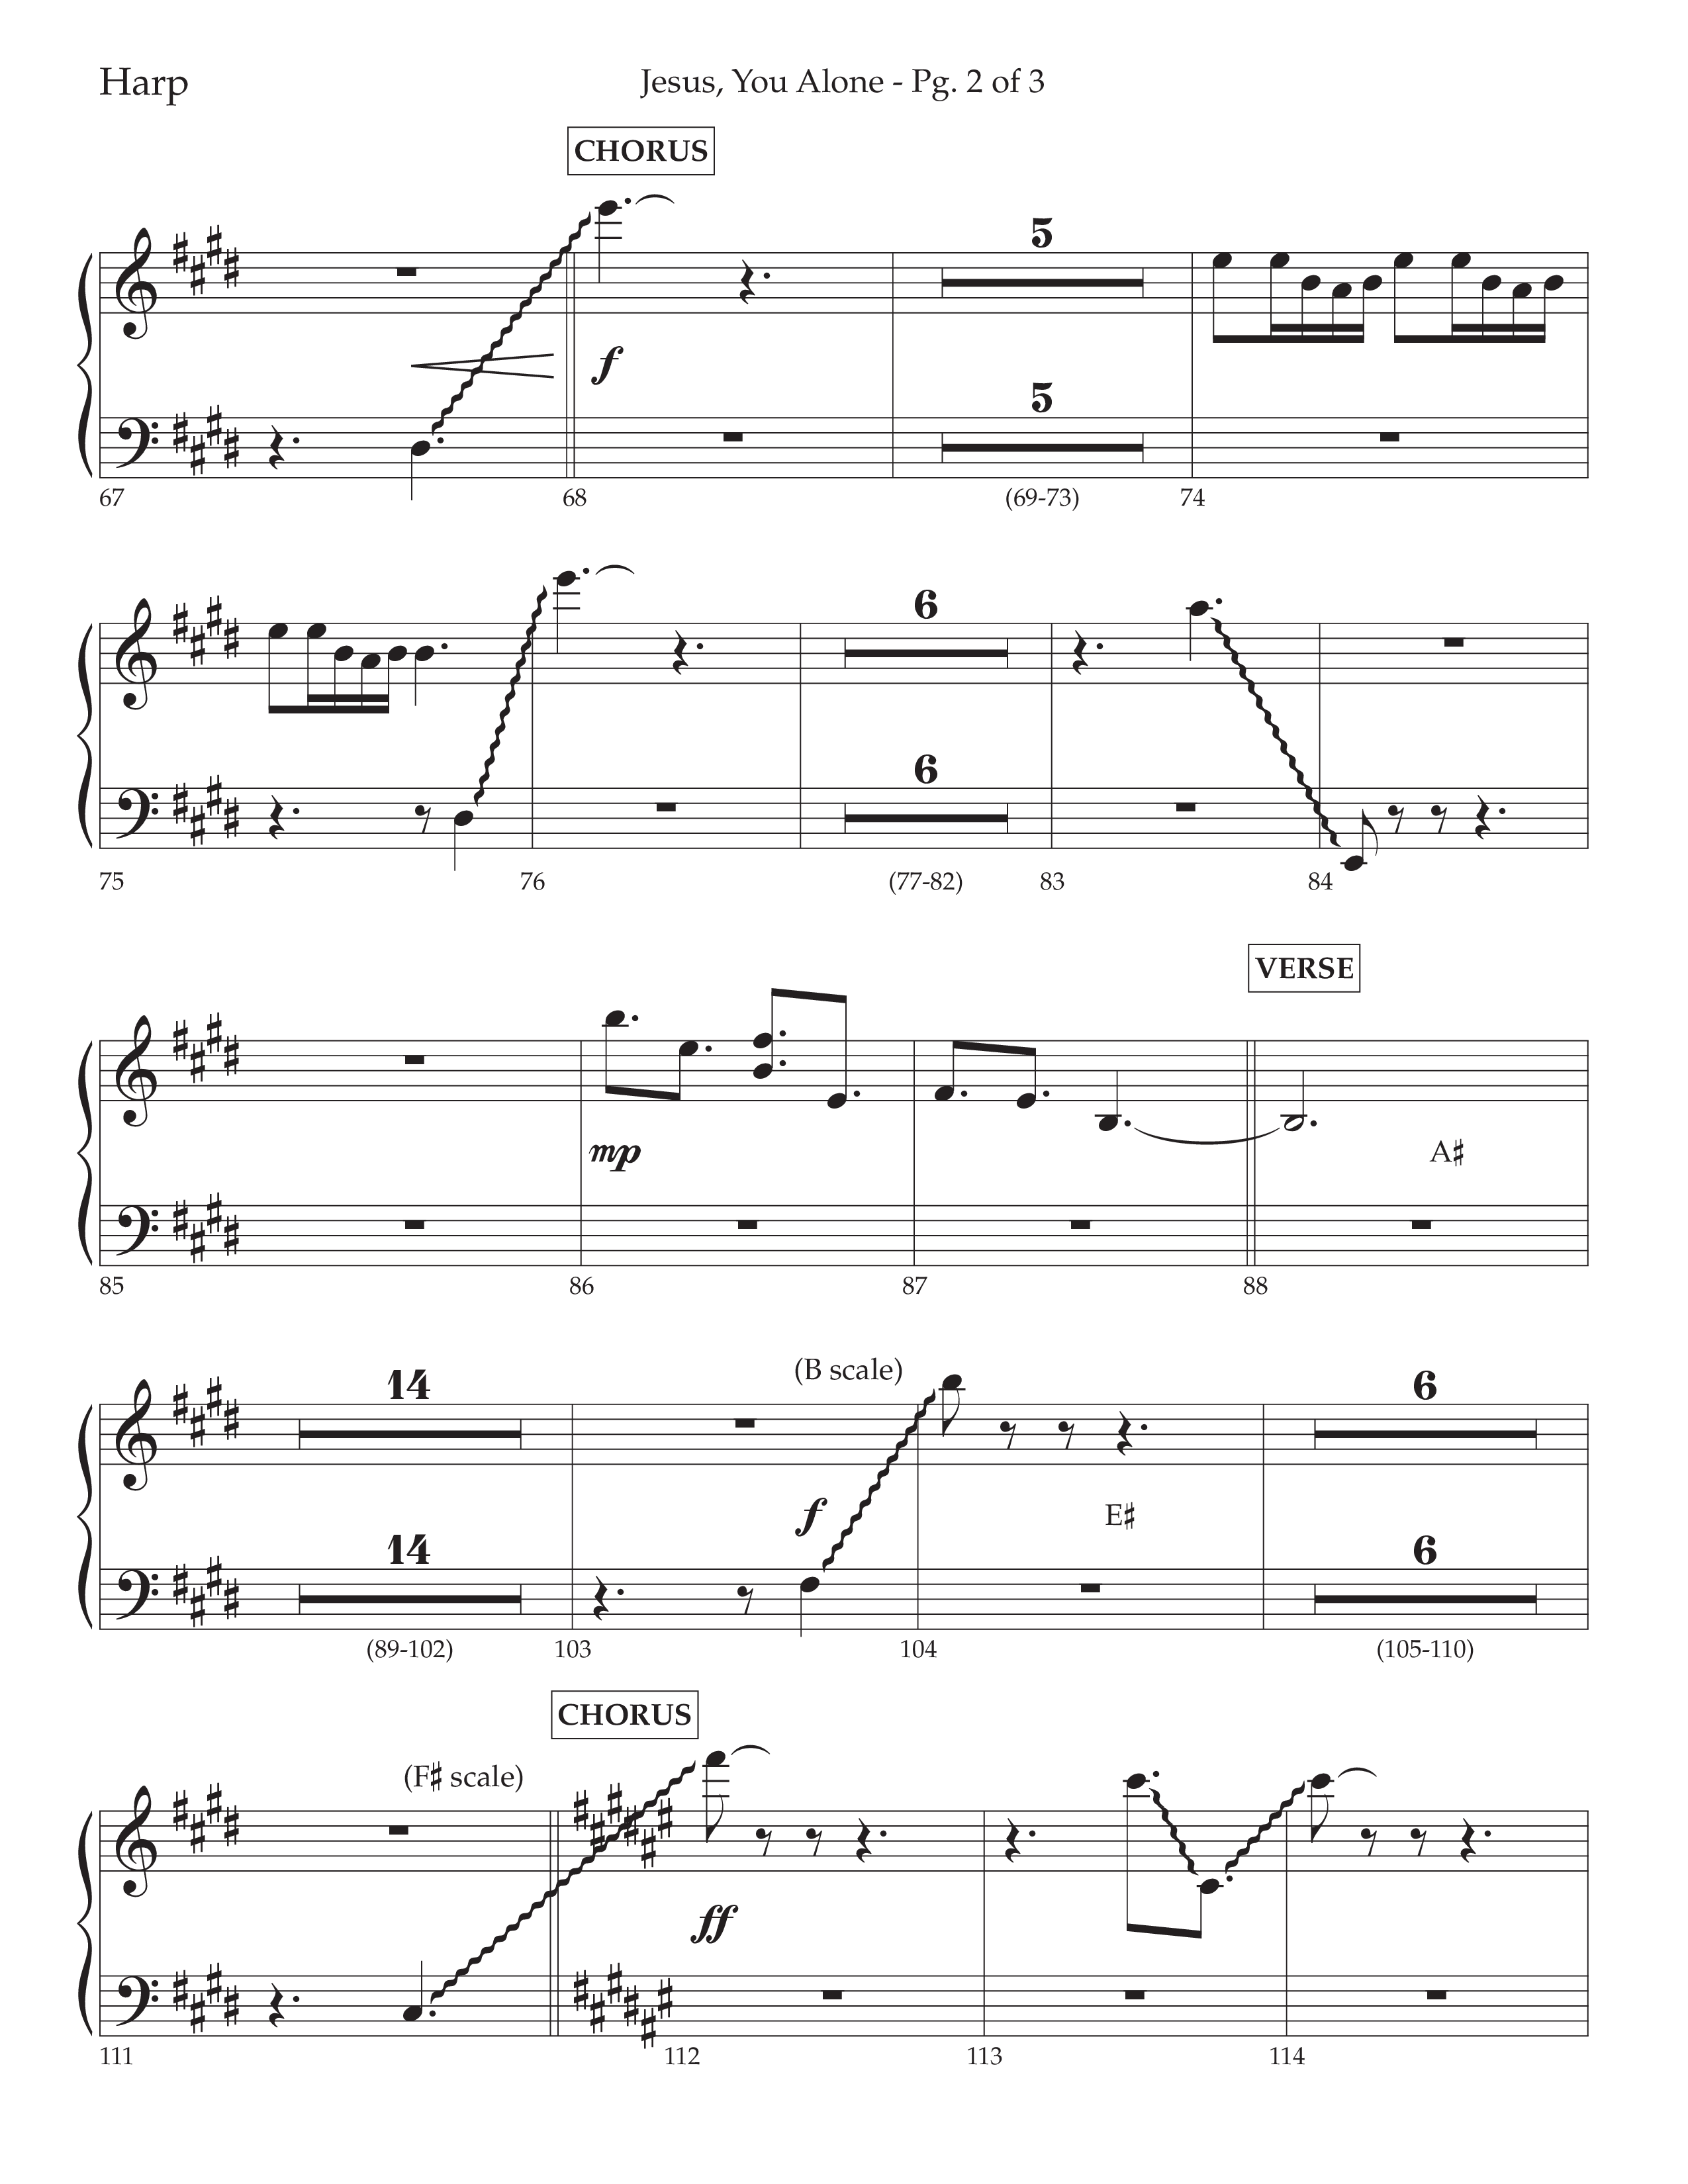 Jesus You Alone (Choral Anthem SATB) Harp (Lifeway Choral / Arr. David Wise / Orch. Bradley Knight)